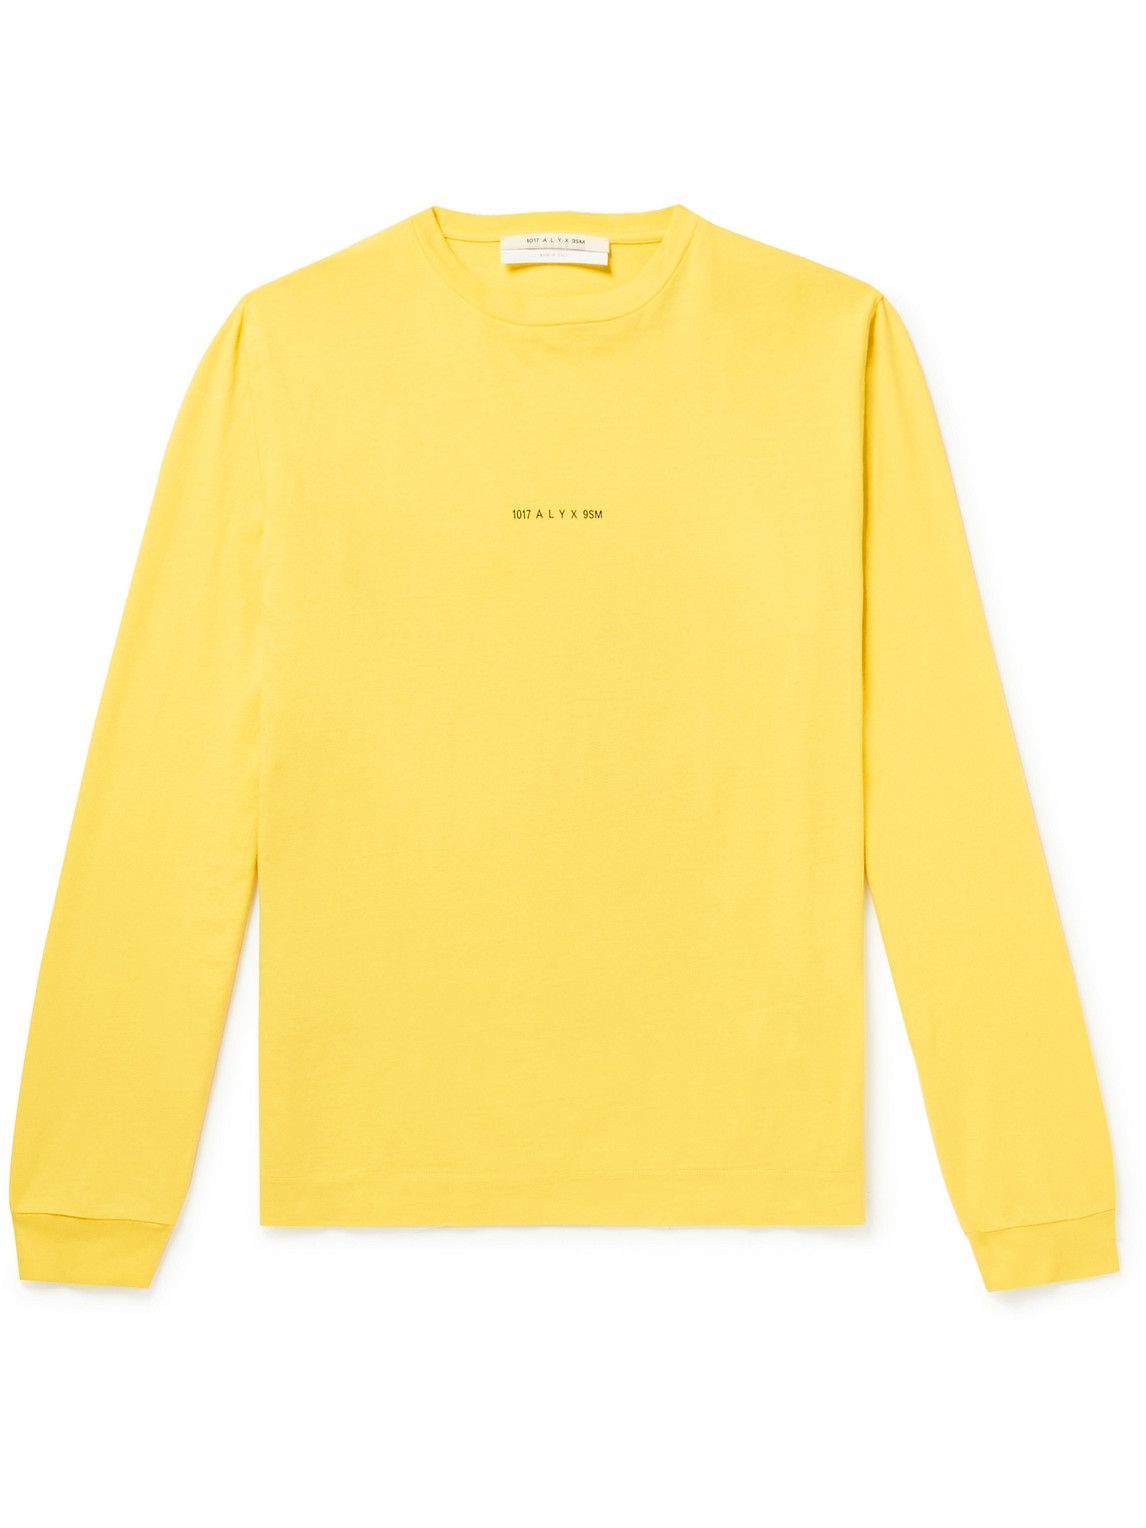 Photo: 1017 ALYX 9SM - Printed Cotton-Jersey T-Shirt - Yellow